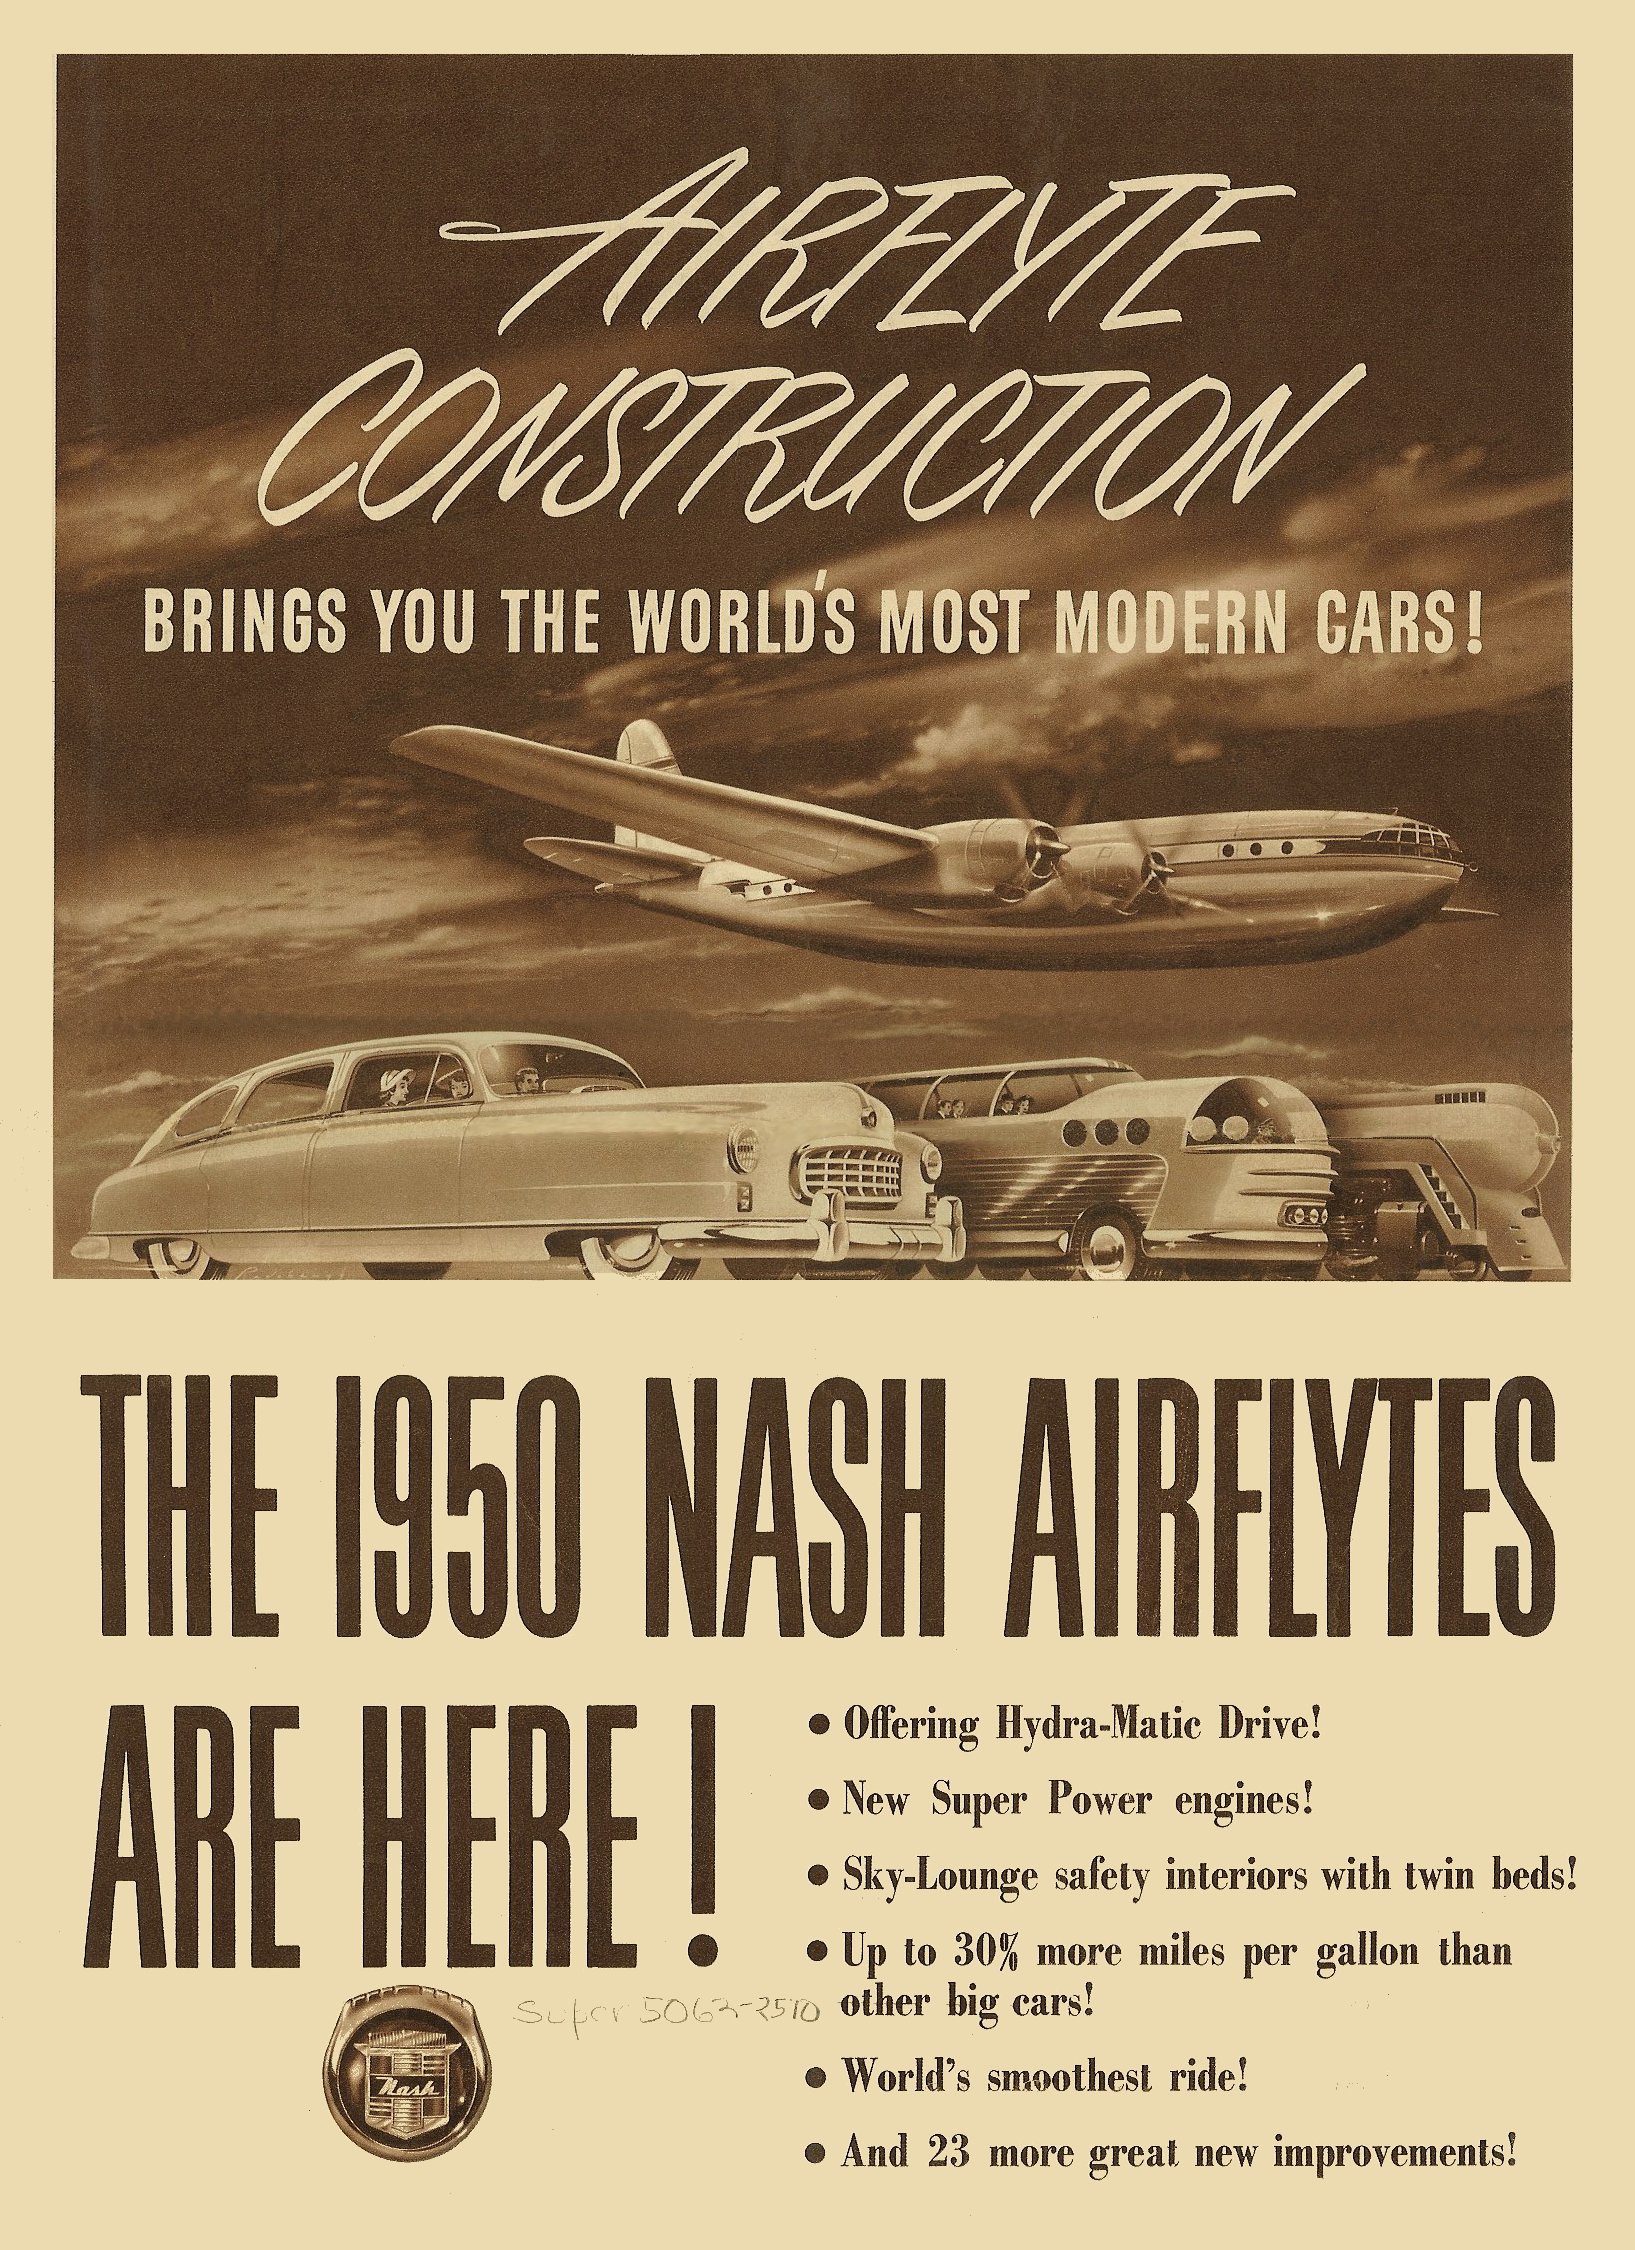 1950 Nash Airflyte Foldout Page 2